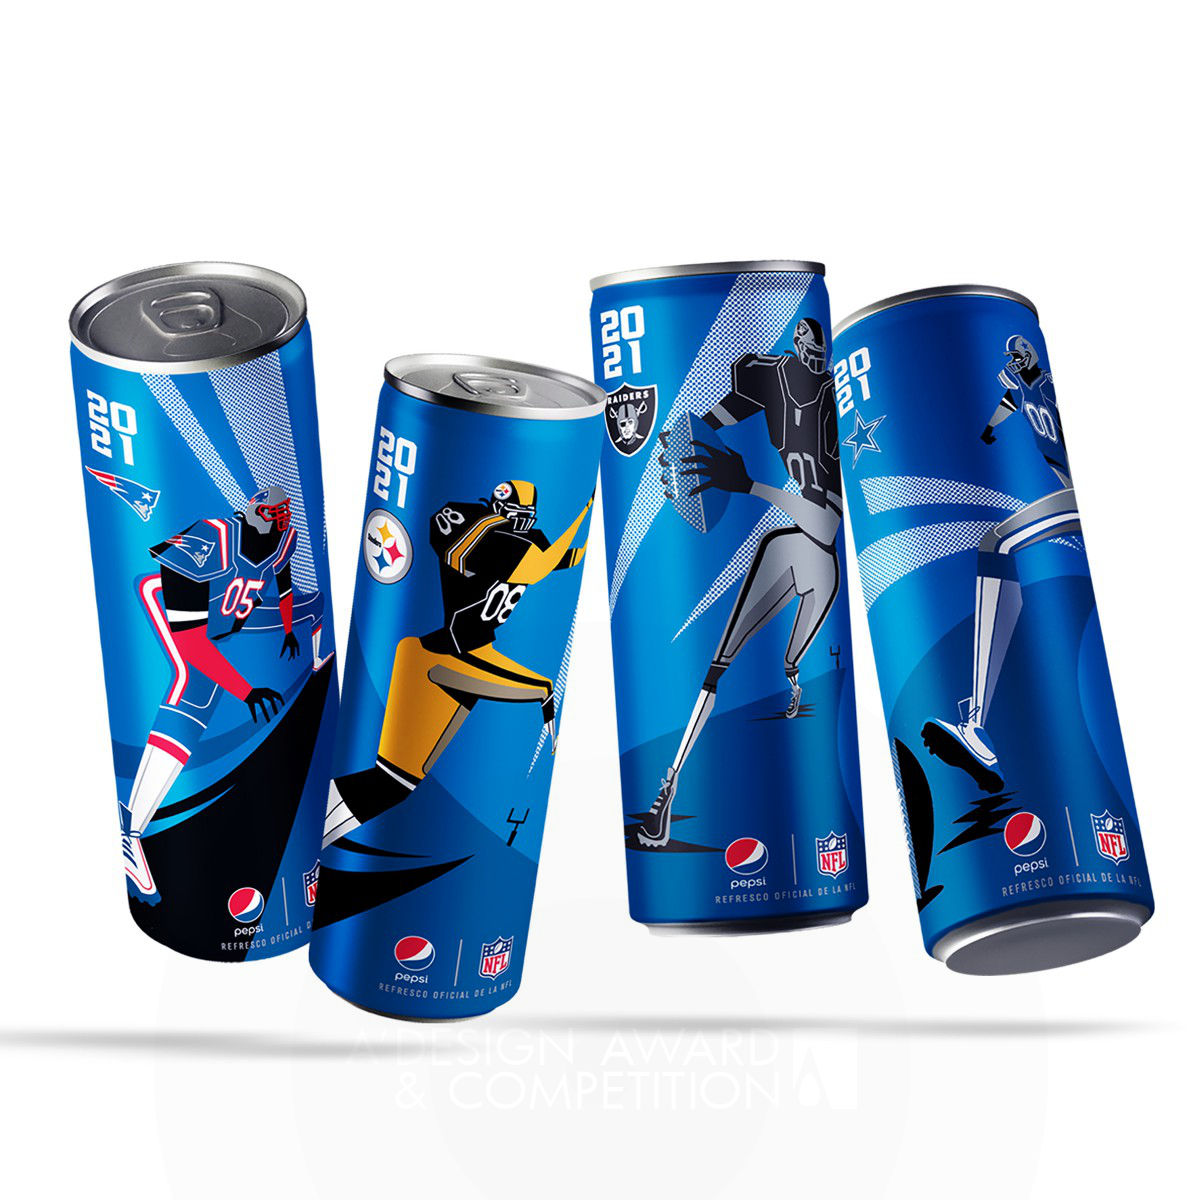 Pepsi NFL Limited Edition Packaging by Dennis Furniss Platinum Packaging Design Award Winner 2021 